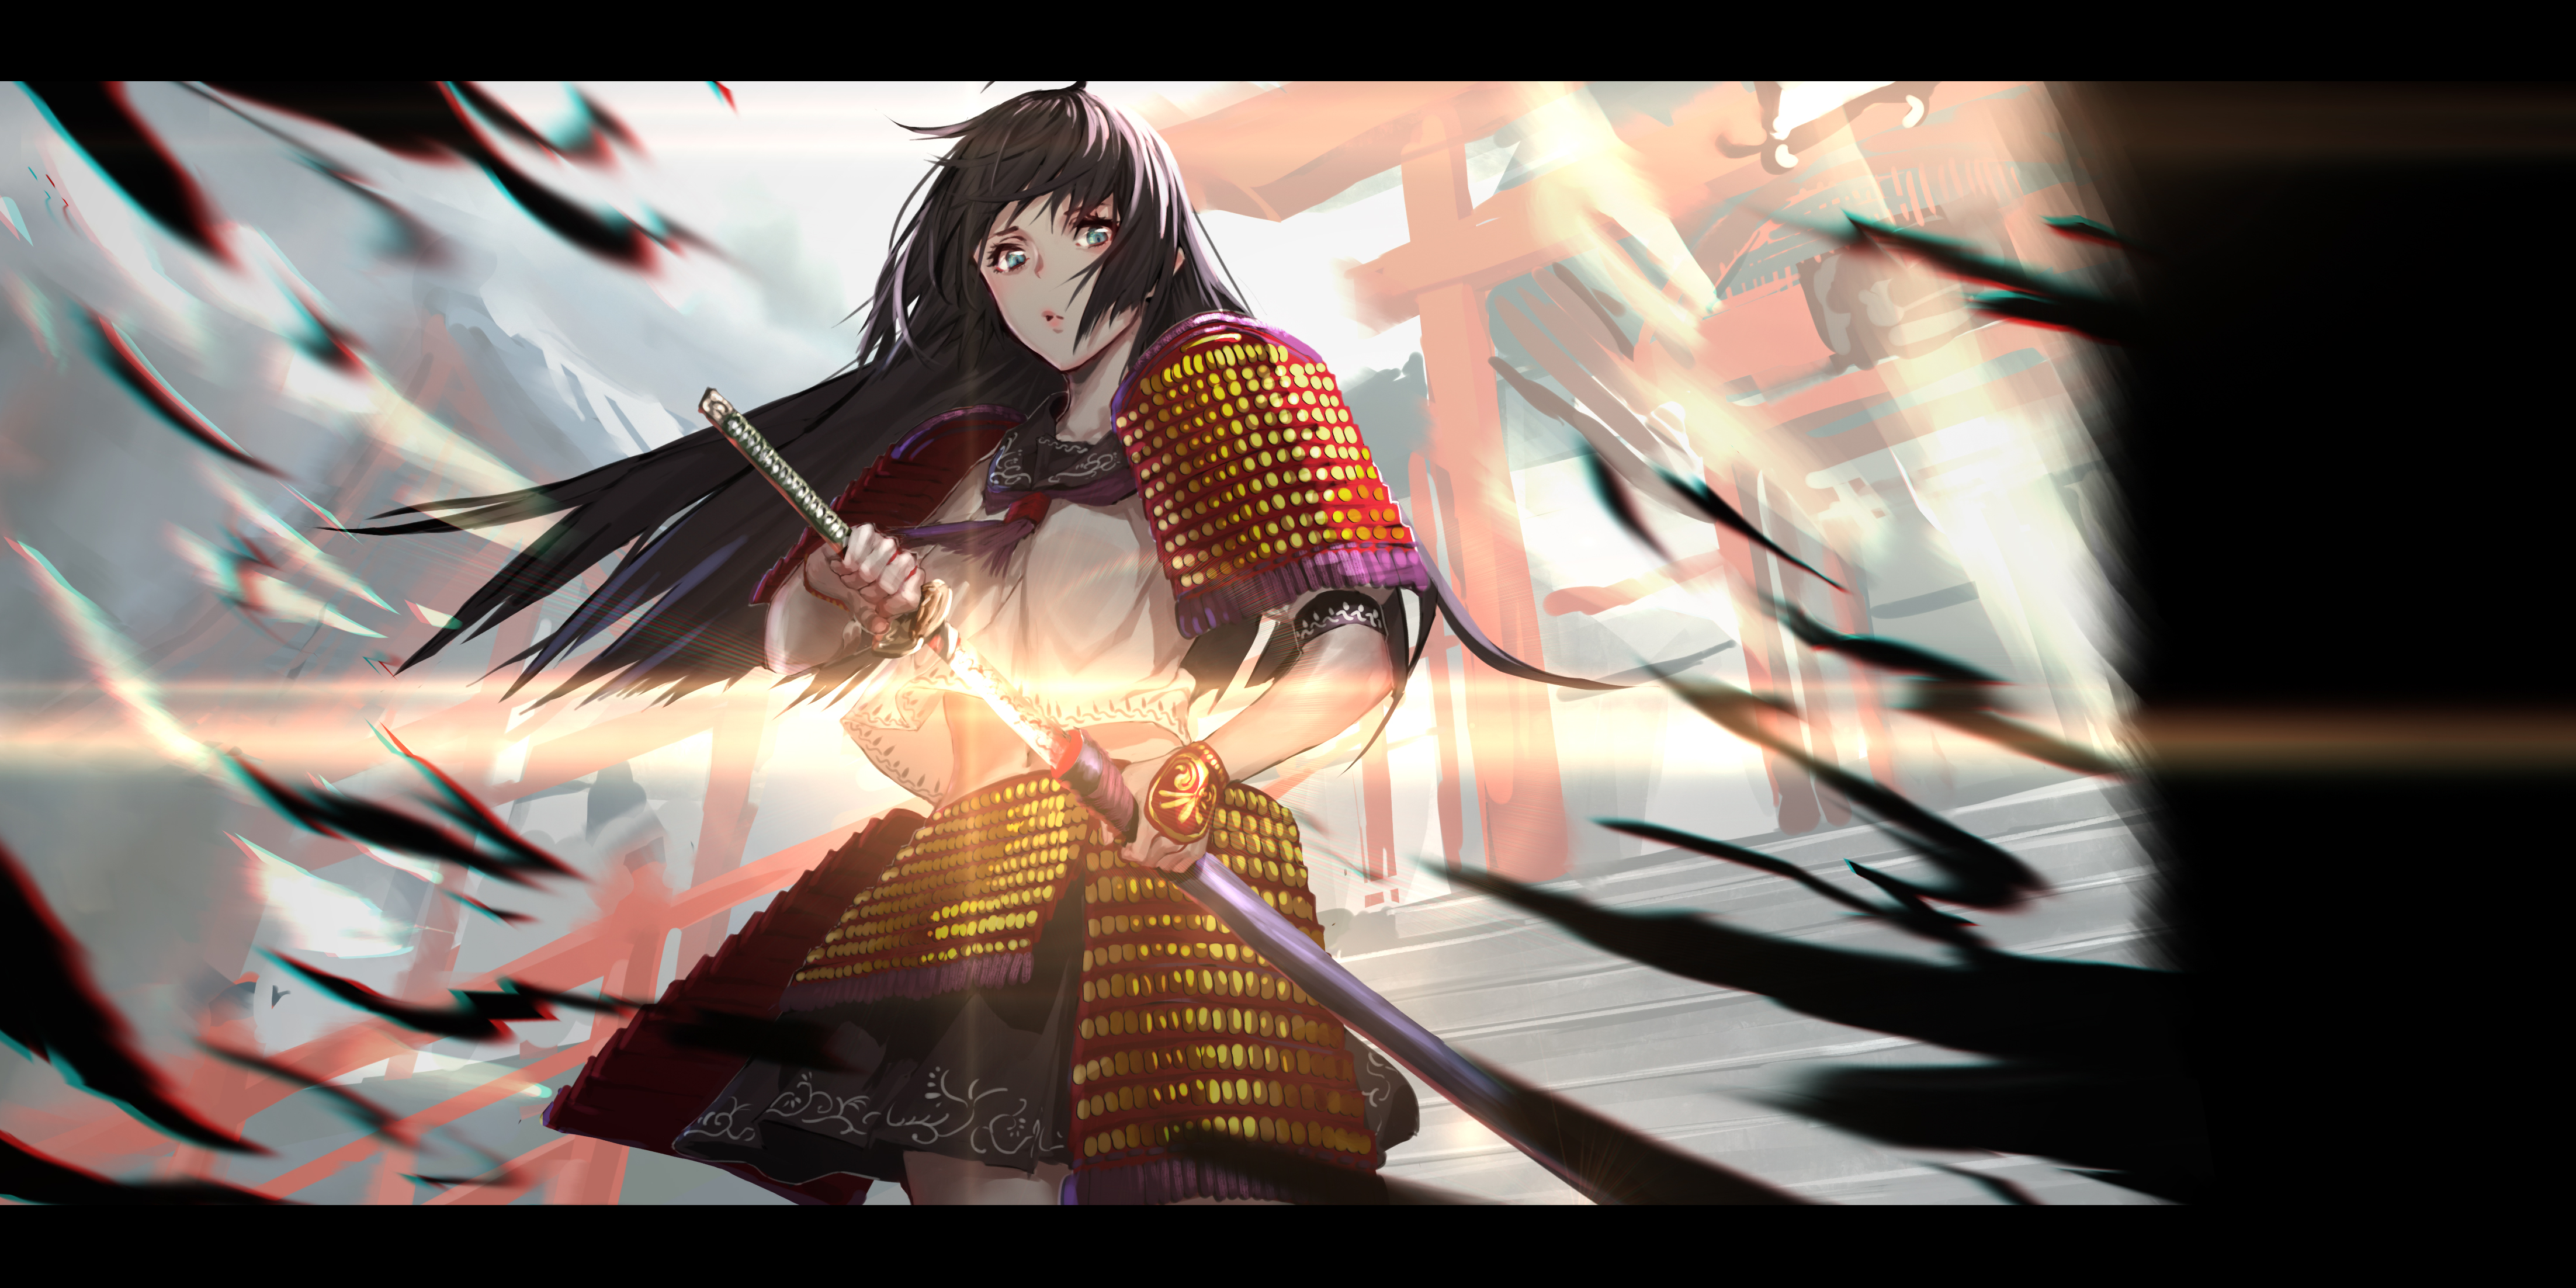 Women Black Hair Long Hair Sailor Uniform Schoolgirl Artwork Digital Art Fantasy Art Armor Samurai K 4409x2205